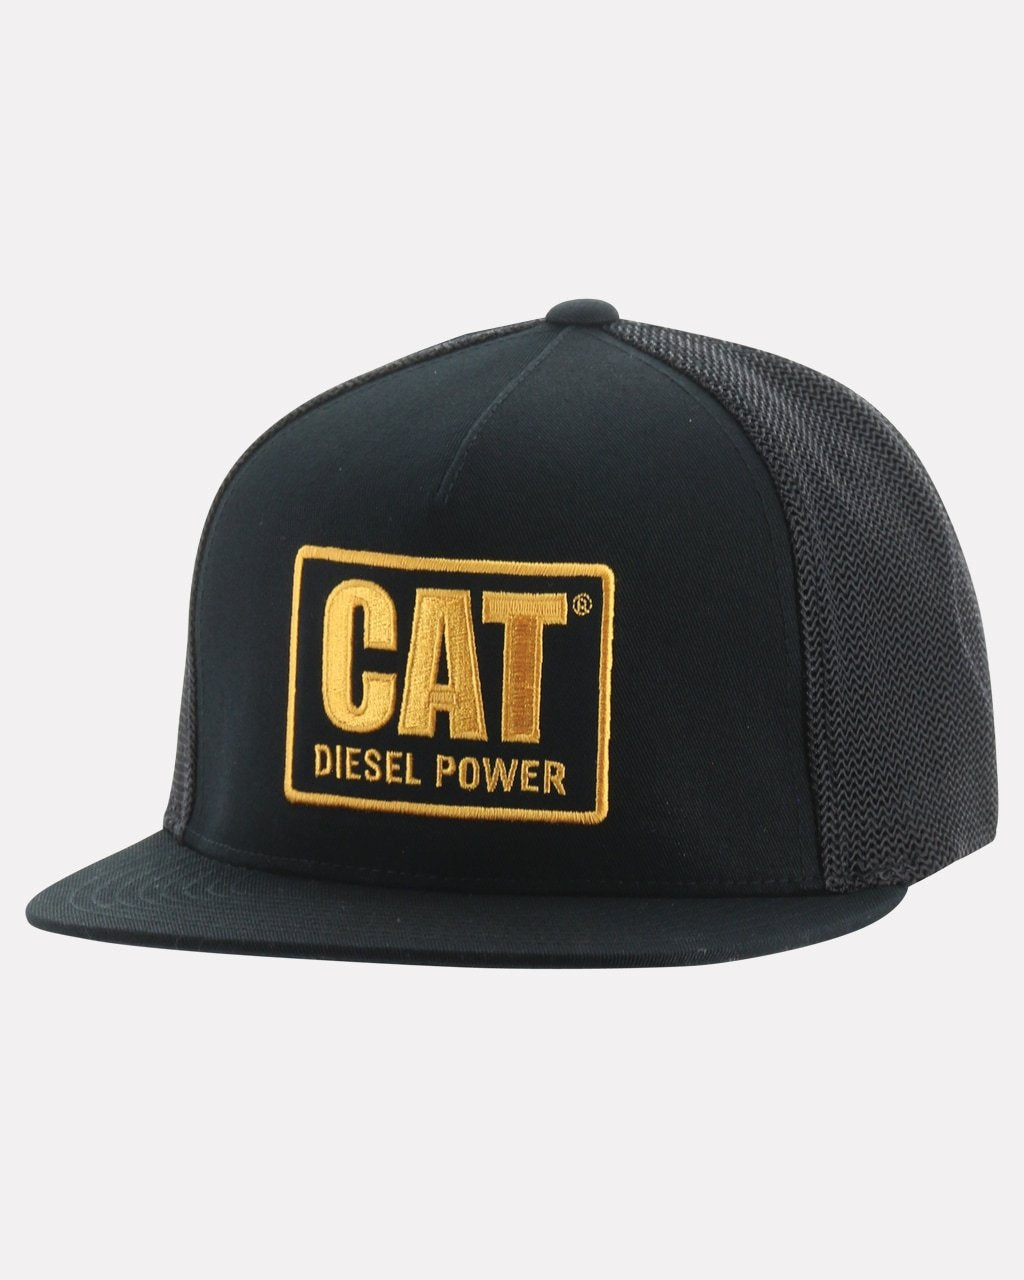 CAT Men's Diesel Power Patch Flat Bill Cap - Work World - Workwear, Work Boots, Safety Gear